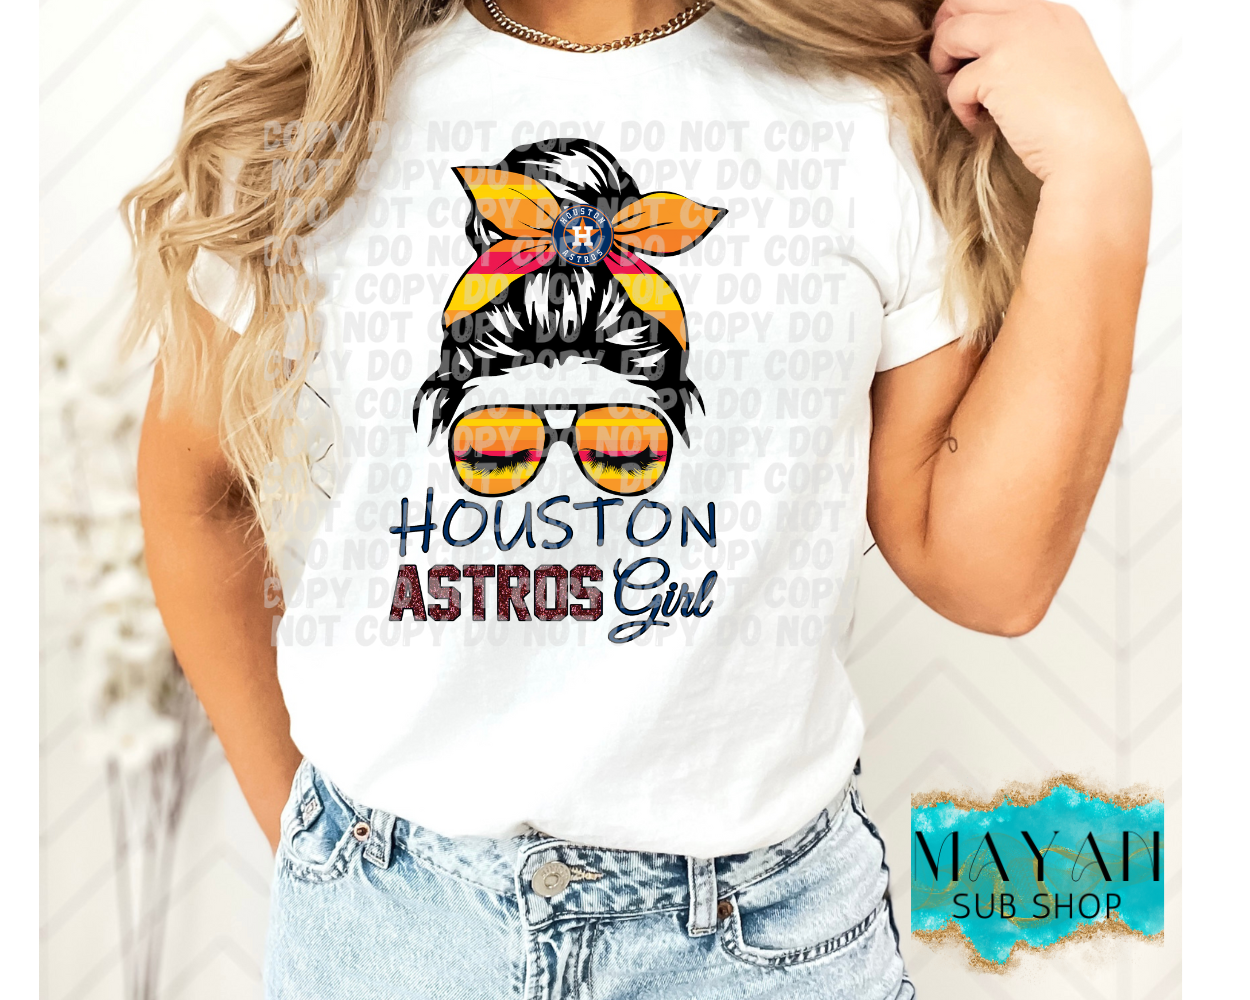 Astros girl messy bun shirt. -Mayan Sub Shop